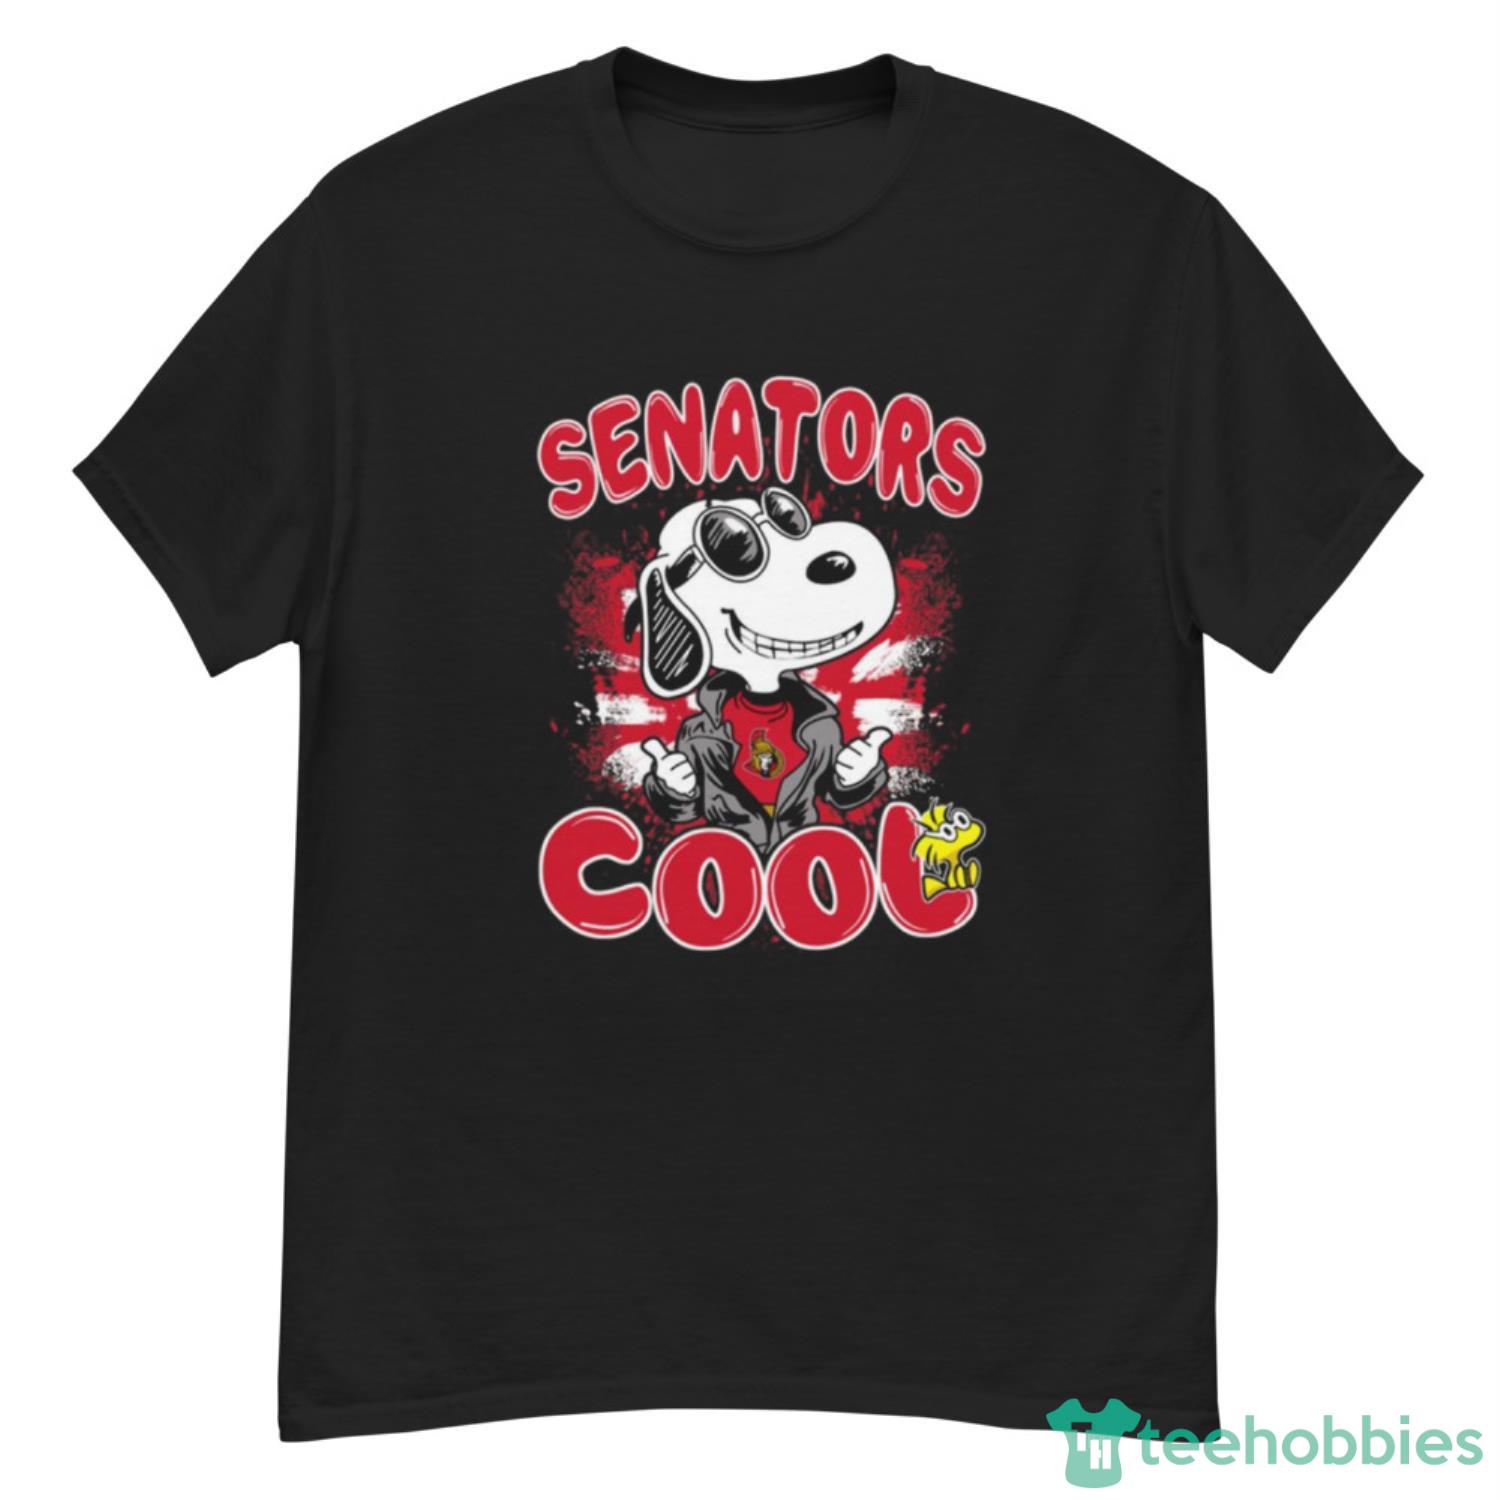 NHL Hockey Ottawa Senators Cool Snoopy Shirt T Shirt - G500 Men’s Classic T-Shirt